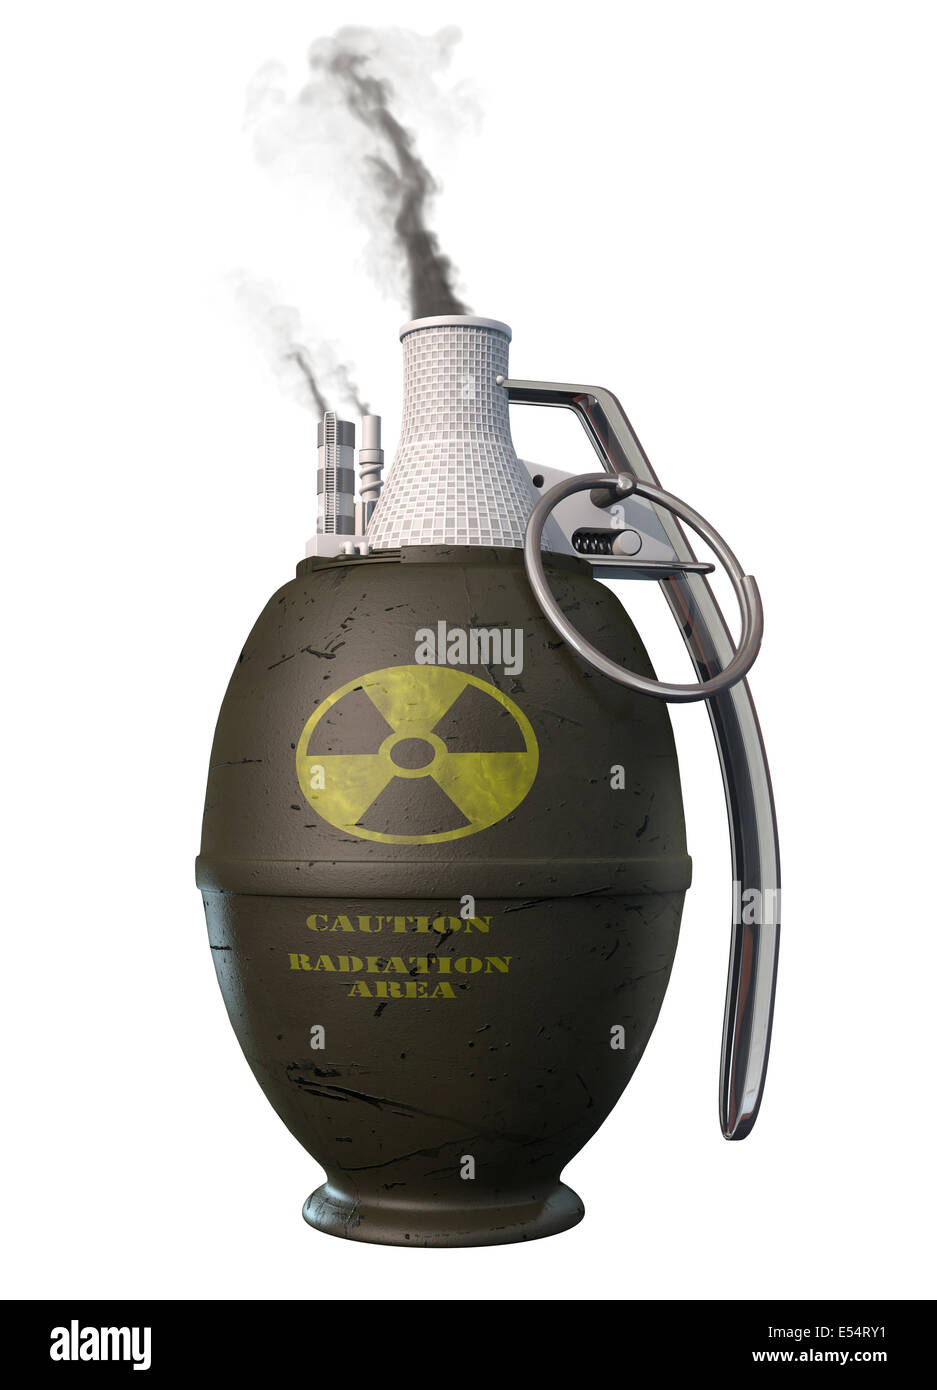 Atomic energy - bomb. Conceptual metaphoric 3d illustration Stock Photo